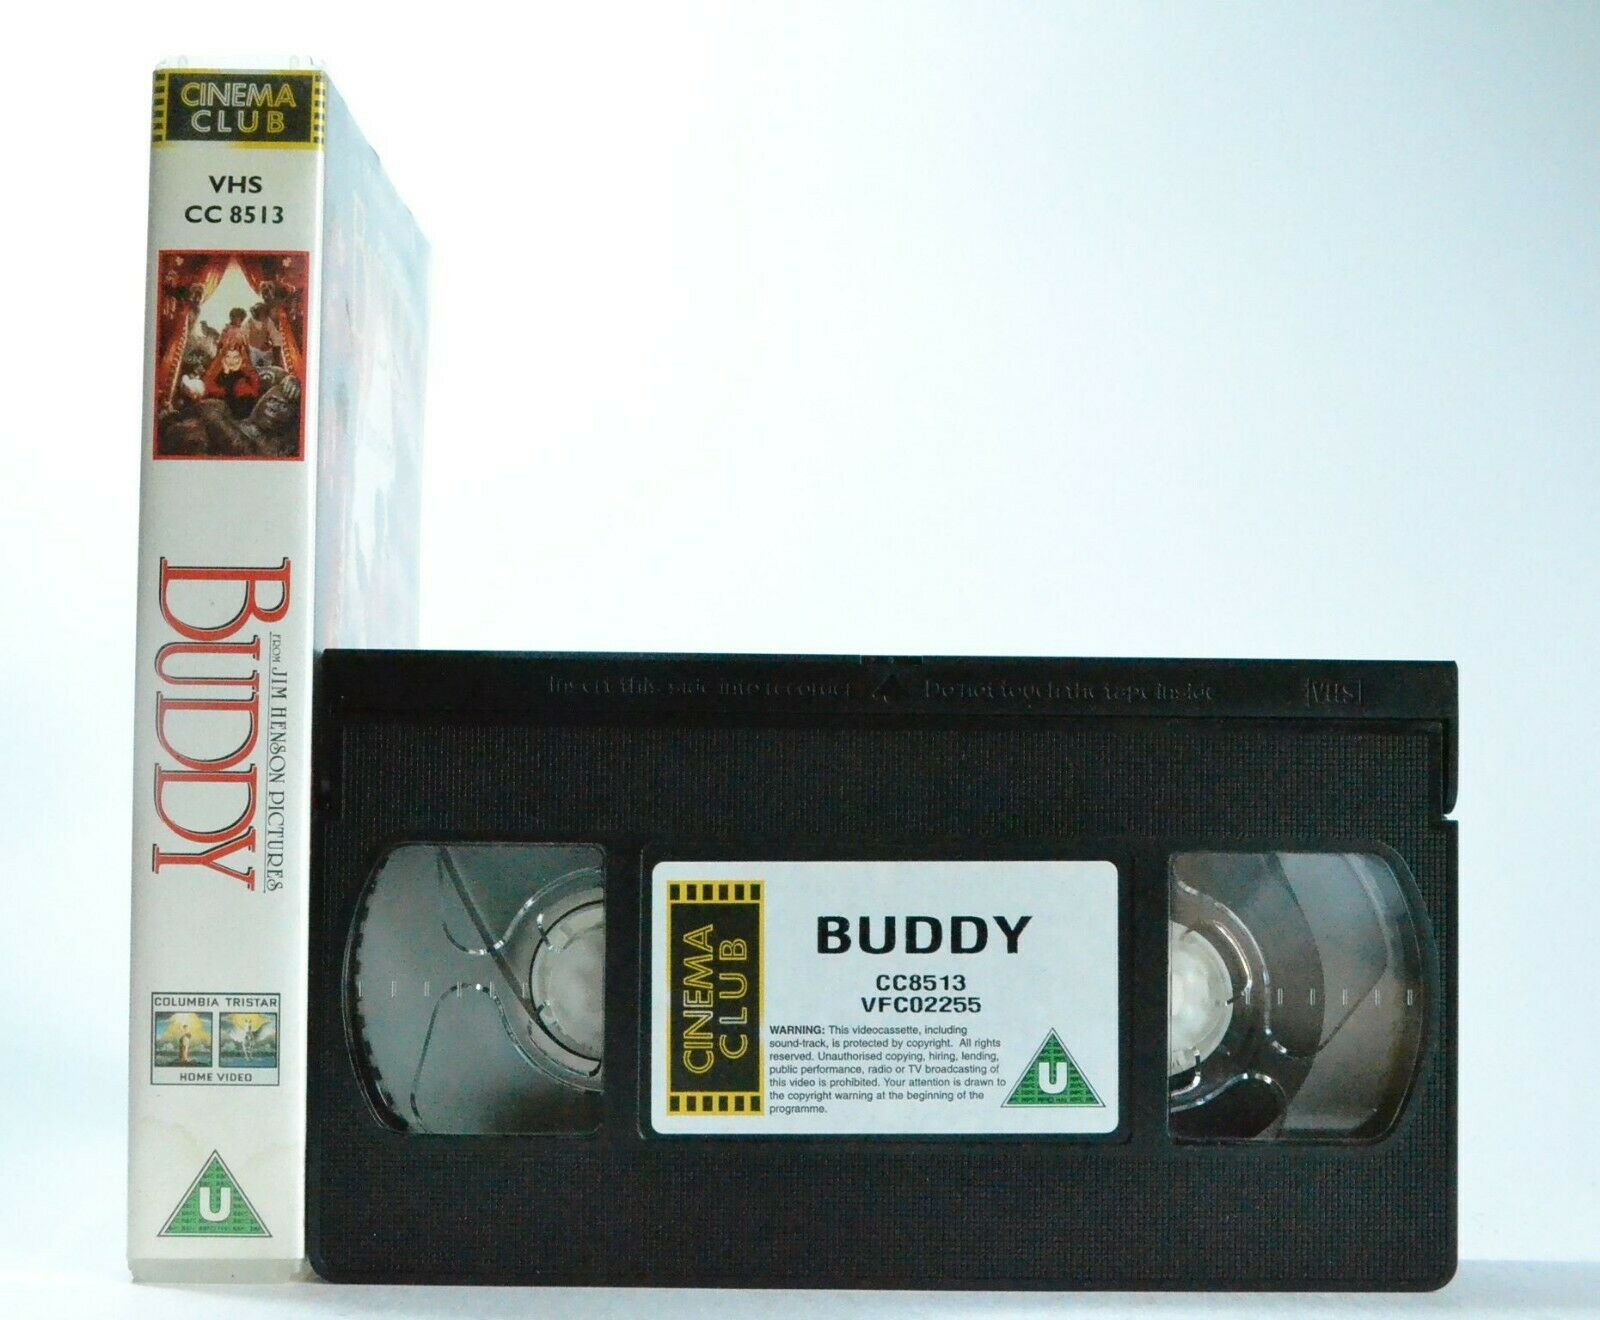 Buddy (1997): Based On True Story - Adventure Drama Comedy - Rene Russo - VHS-